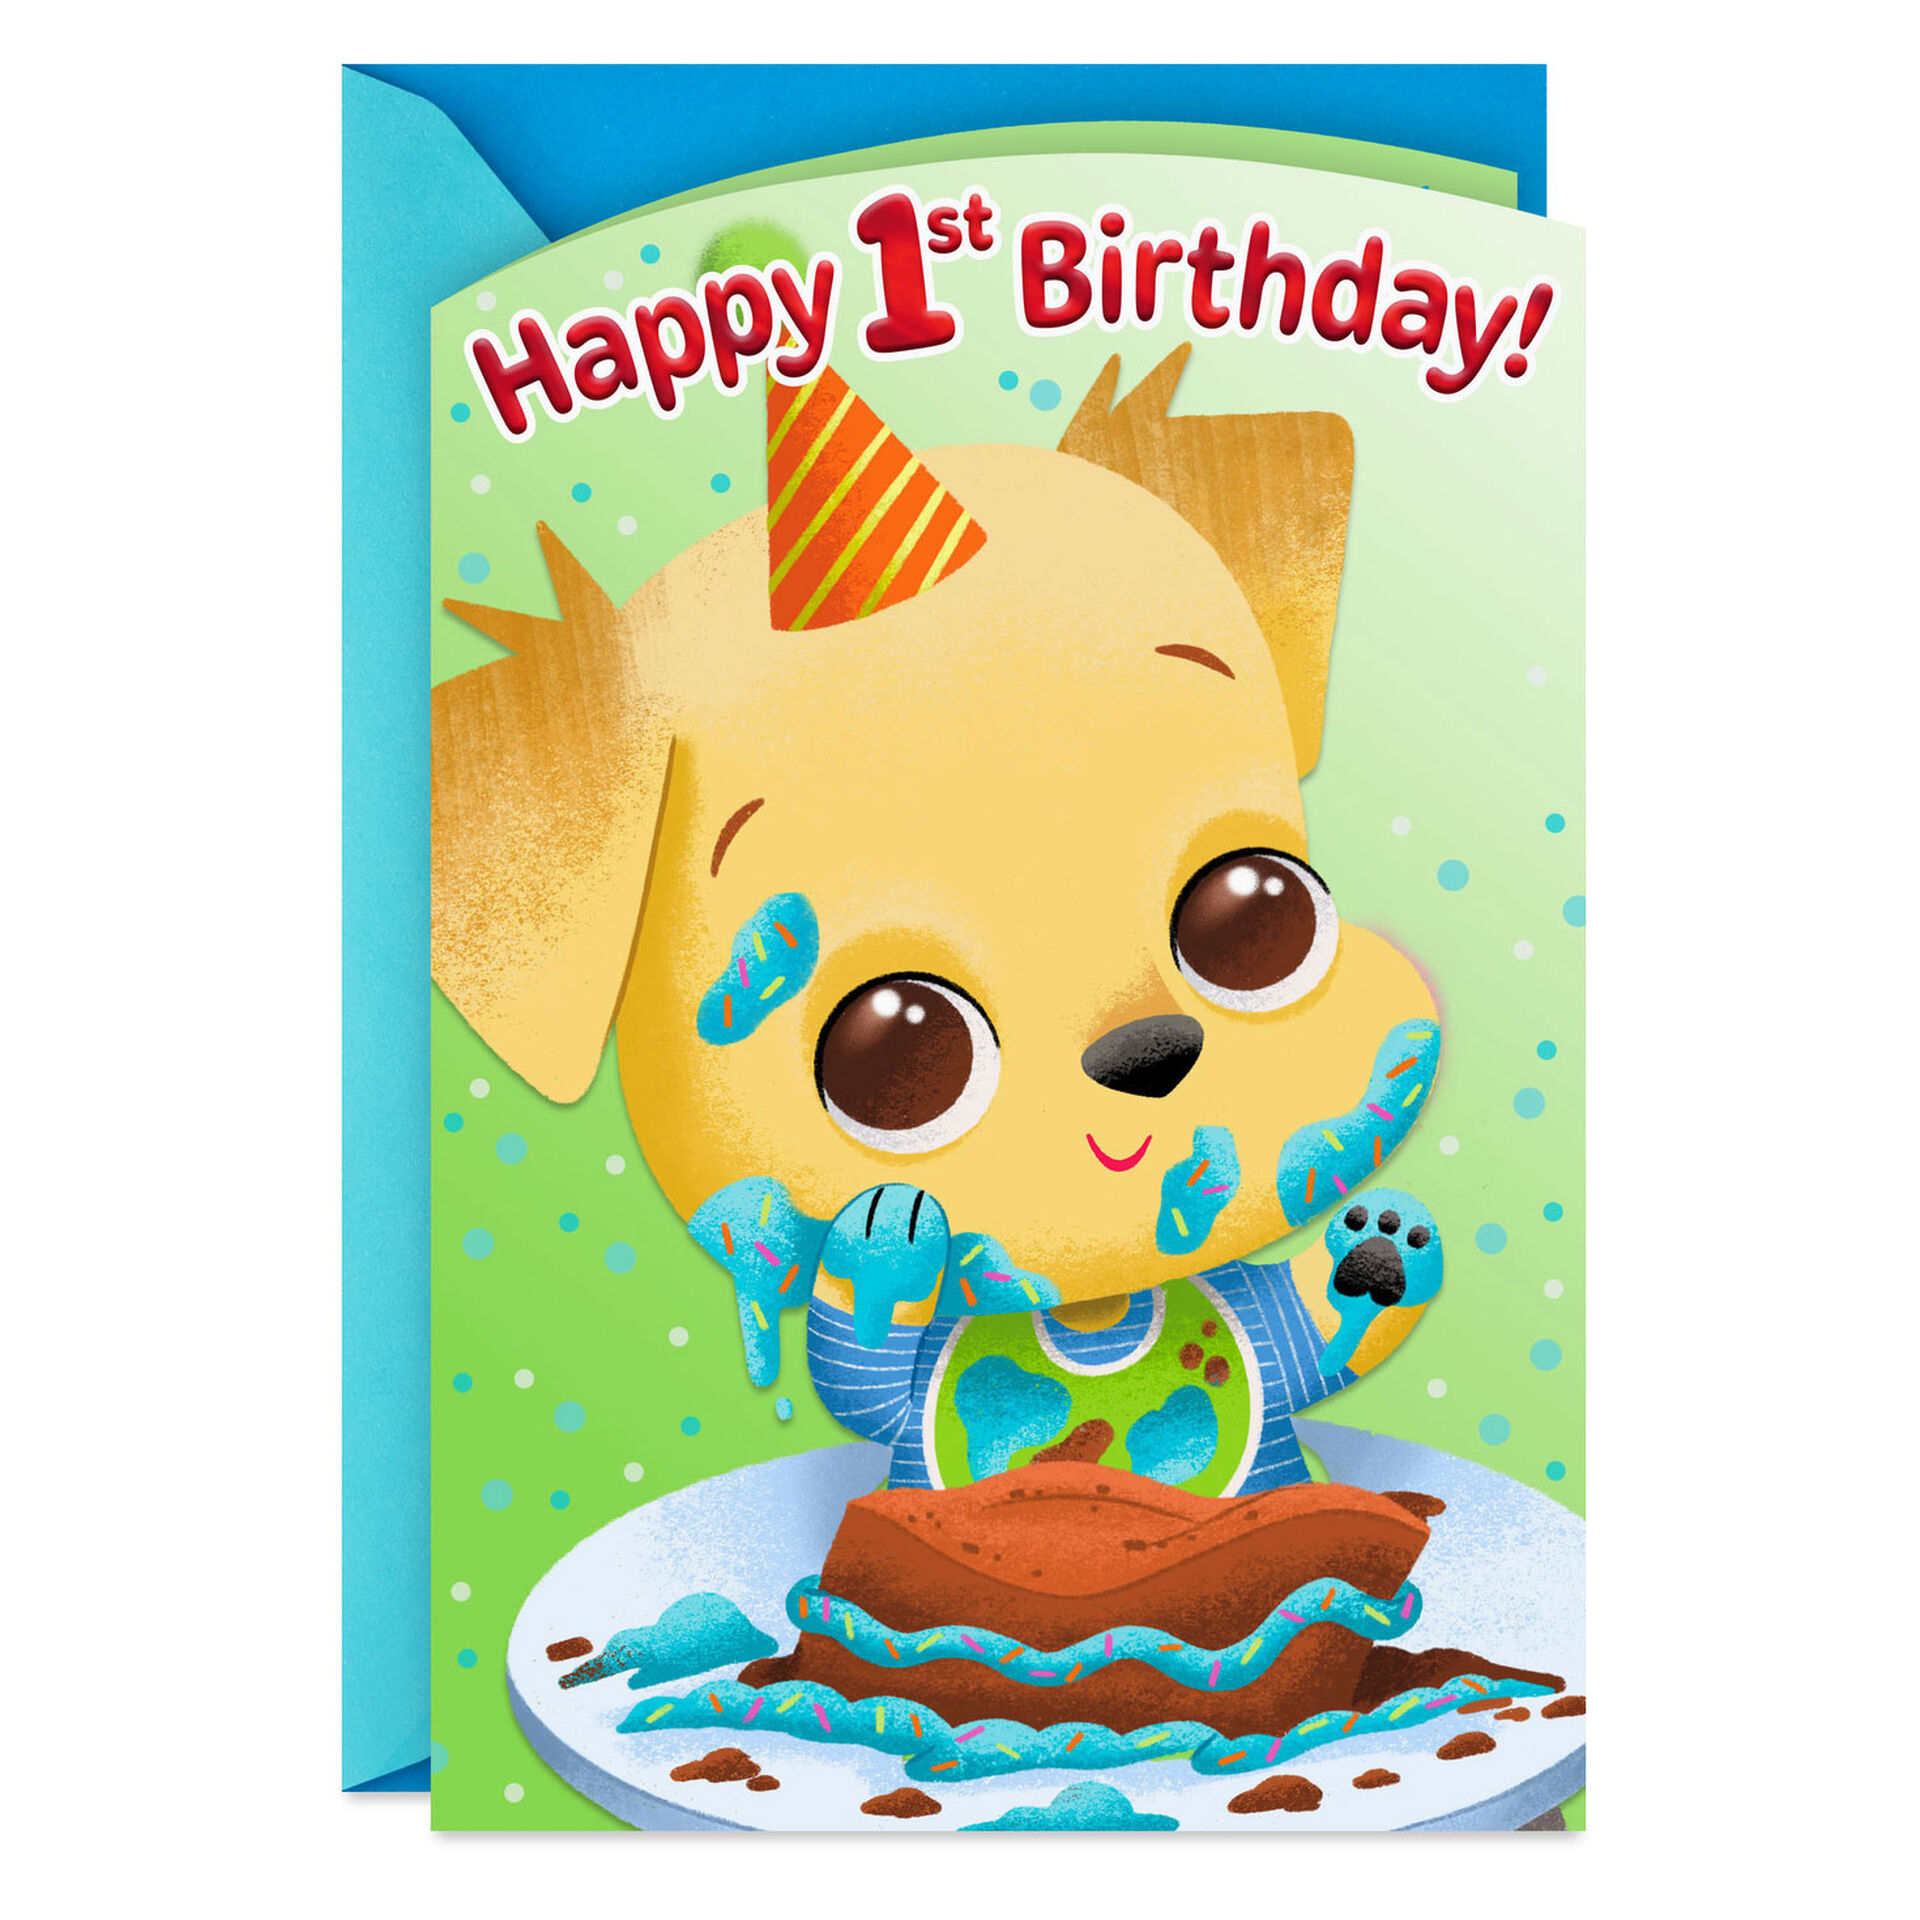 Dog-Eating-Cake-Kids-First-Birthday-Card-for-Boy_299HKB5949_01